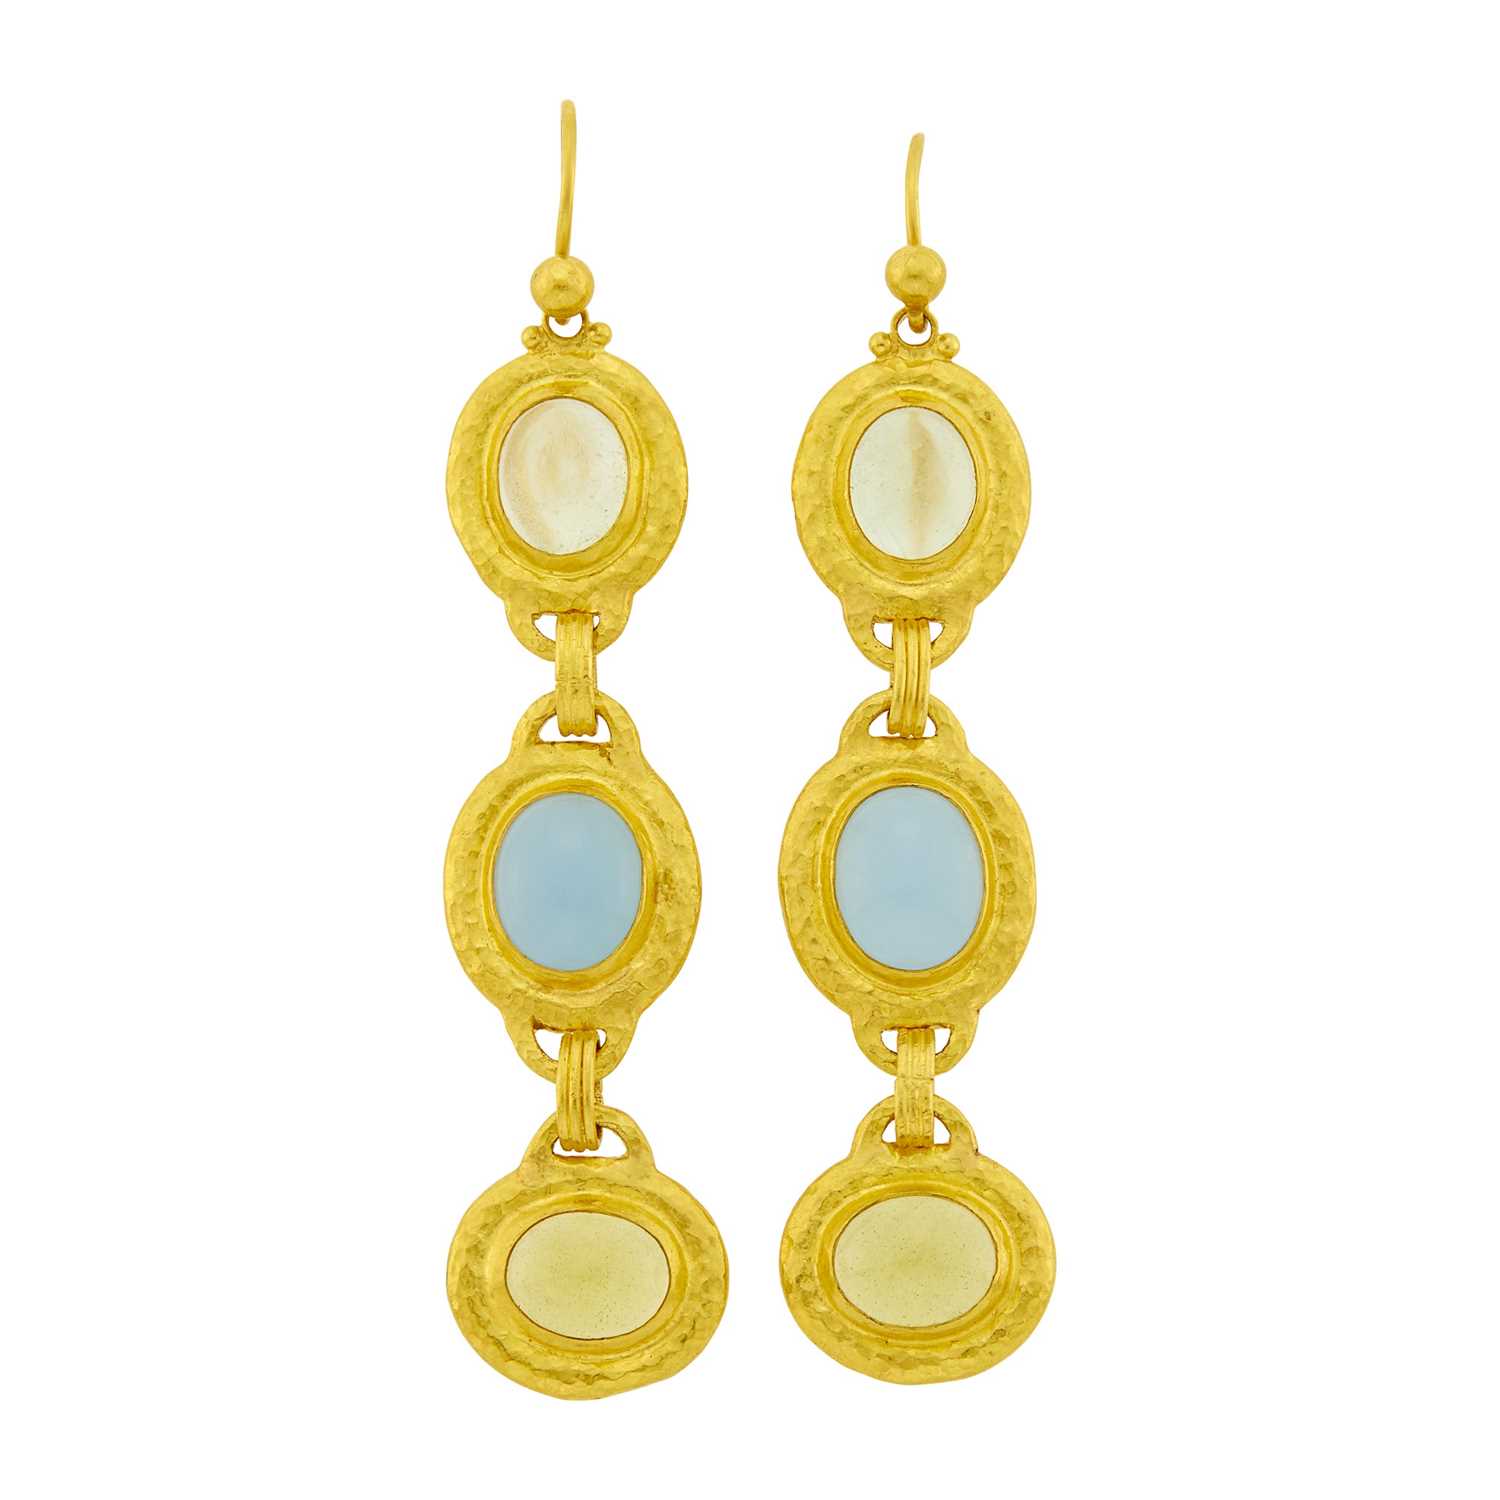 Lot 10 - Gurhan Pair of High Karat Hammered Gold and Gem-Set Pendant-Earrings